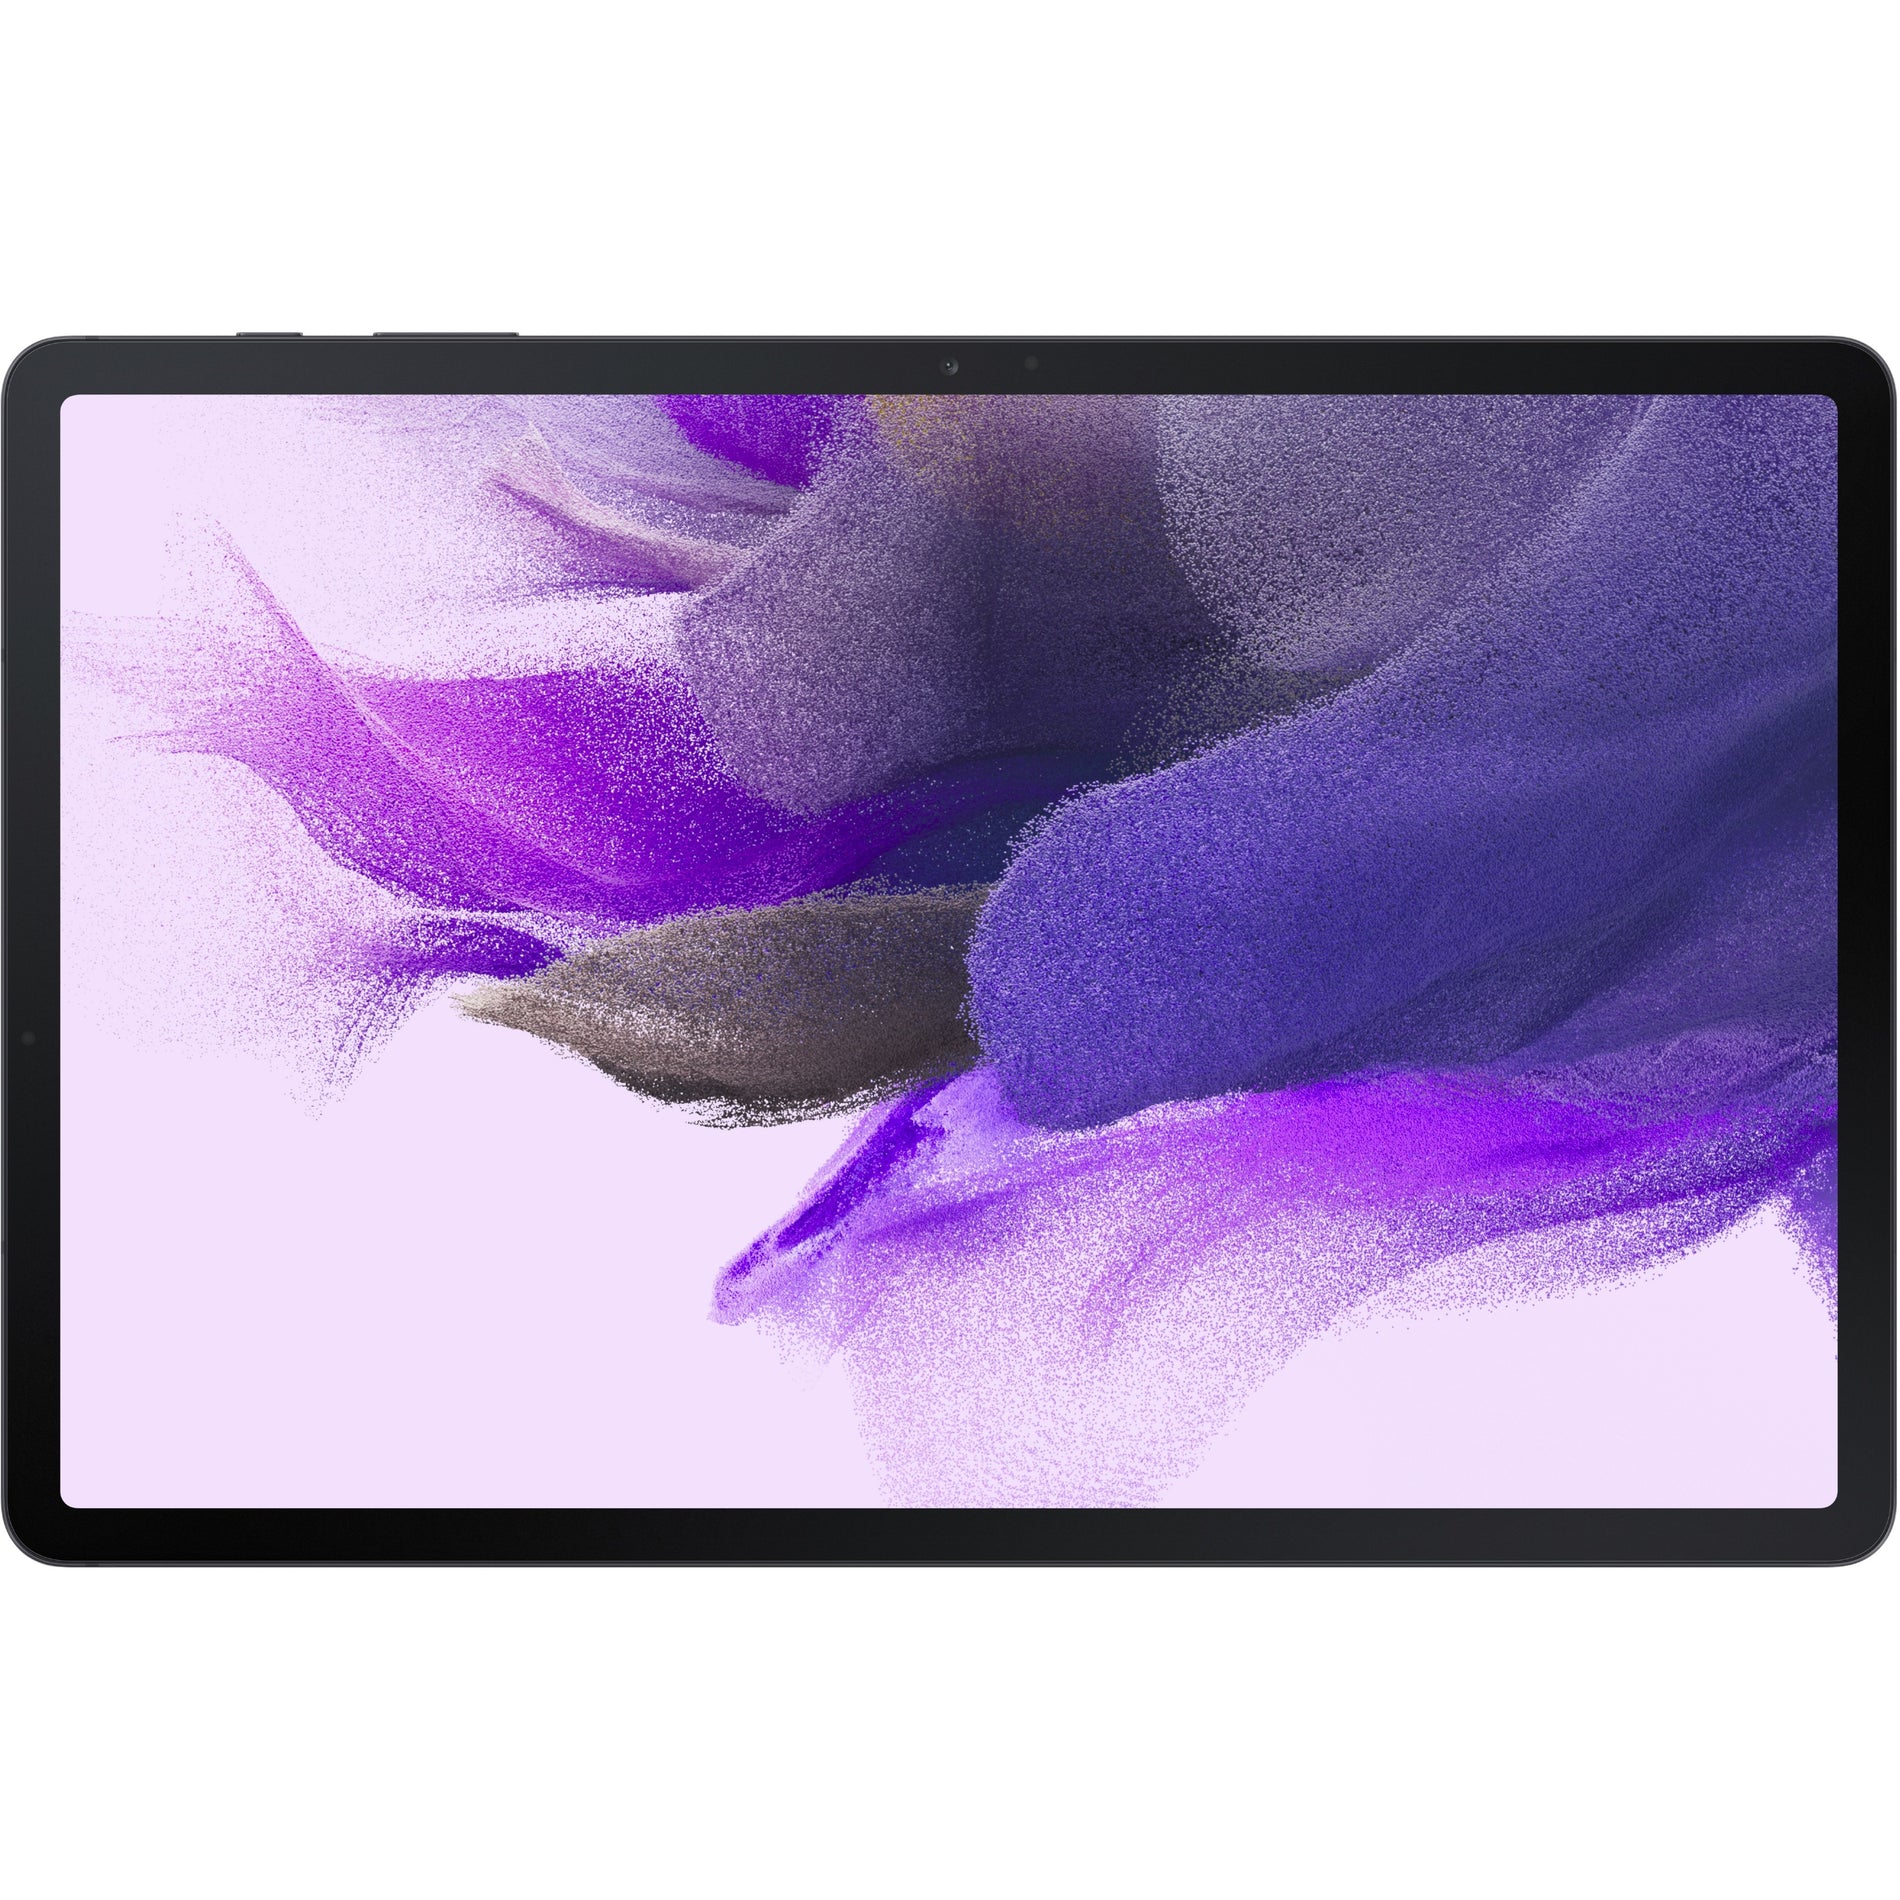 Samsung Galaxy Tab S7 FE 5G SM-T738U Tablet - 12.4" WQXGA - Kryo 570 Octa-core (8 Core) 2.20 GHz - 4 GB RAM - 64 GB Storage - Android 11 - 5G - Mystic Black (SM-T738UZKAATT) Front image